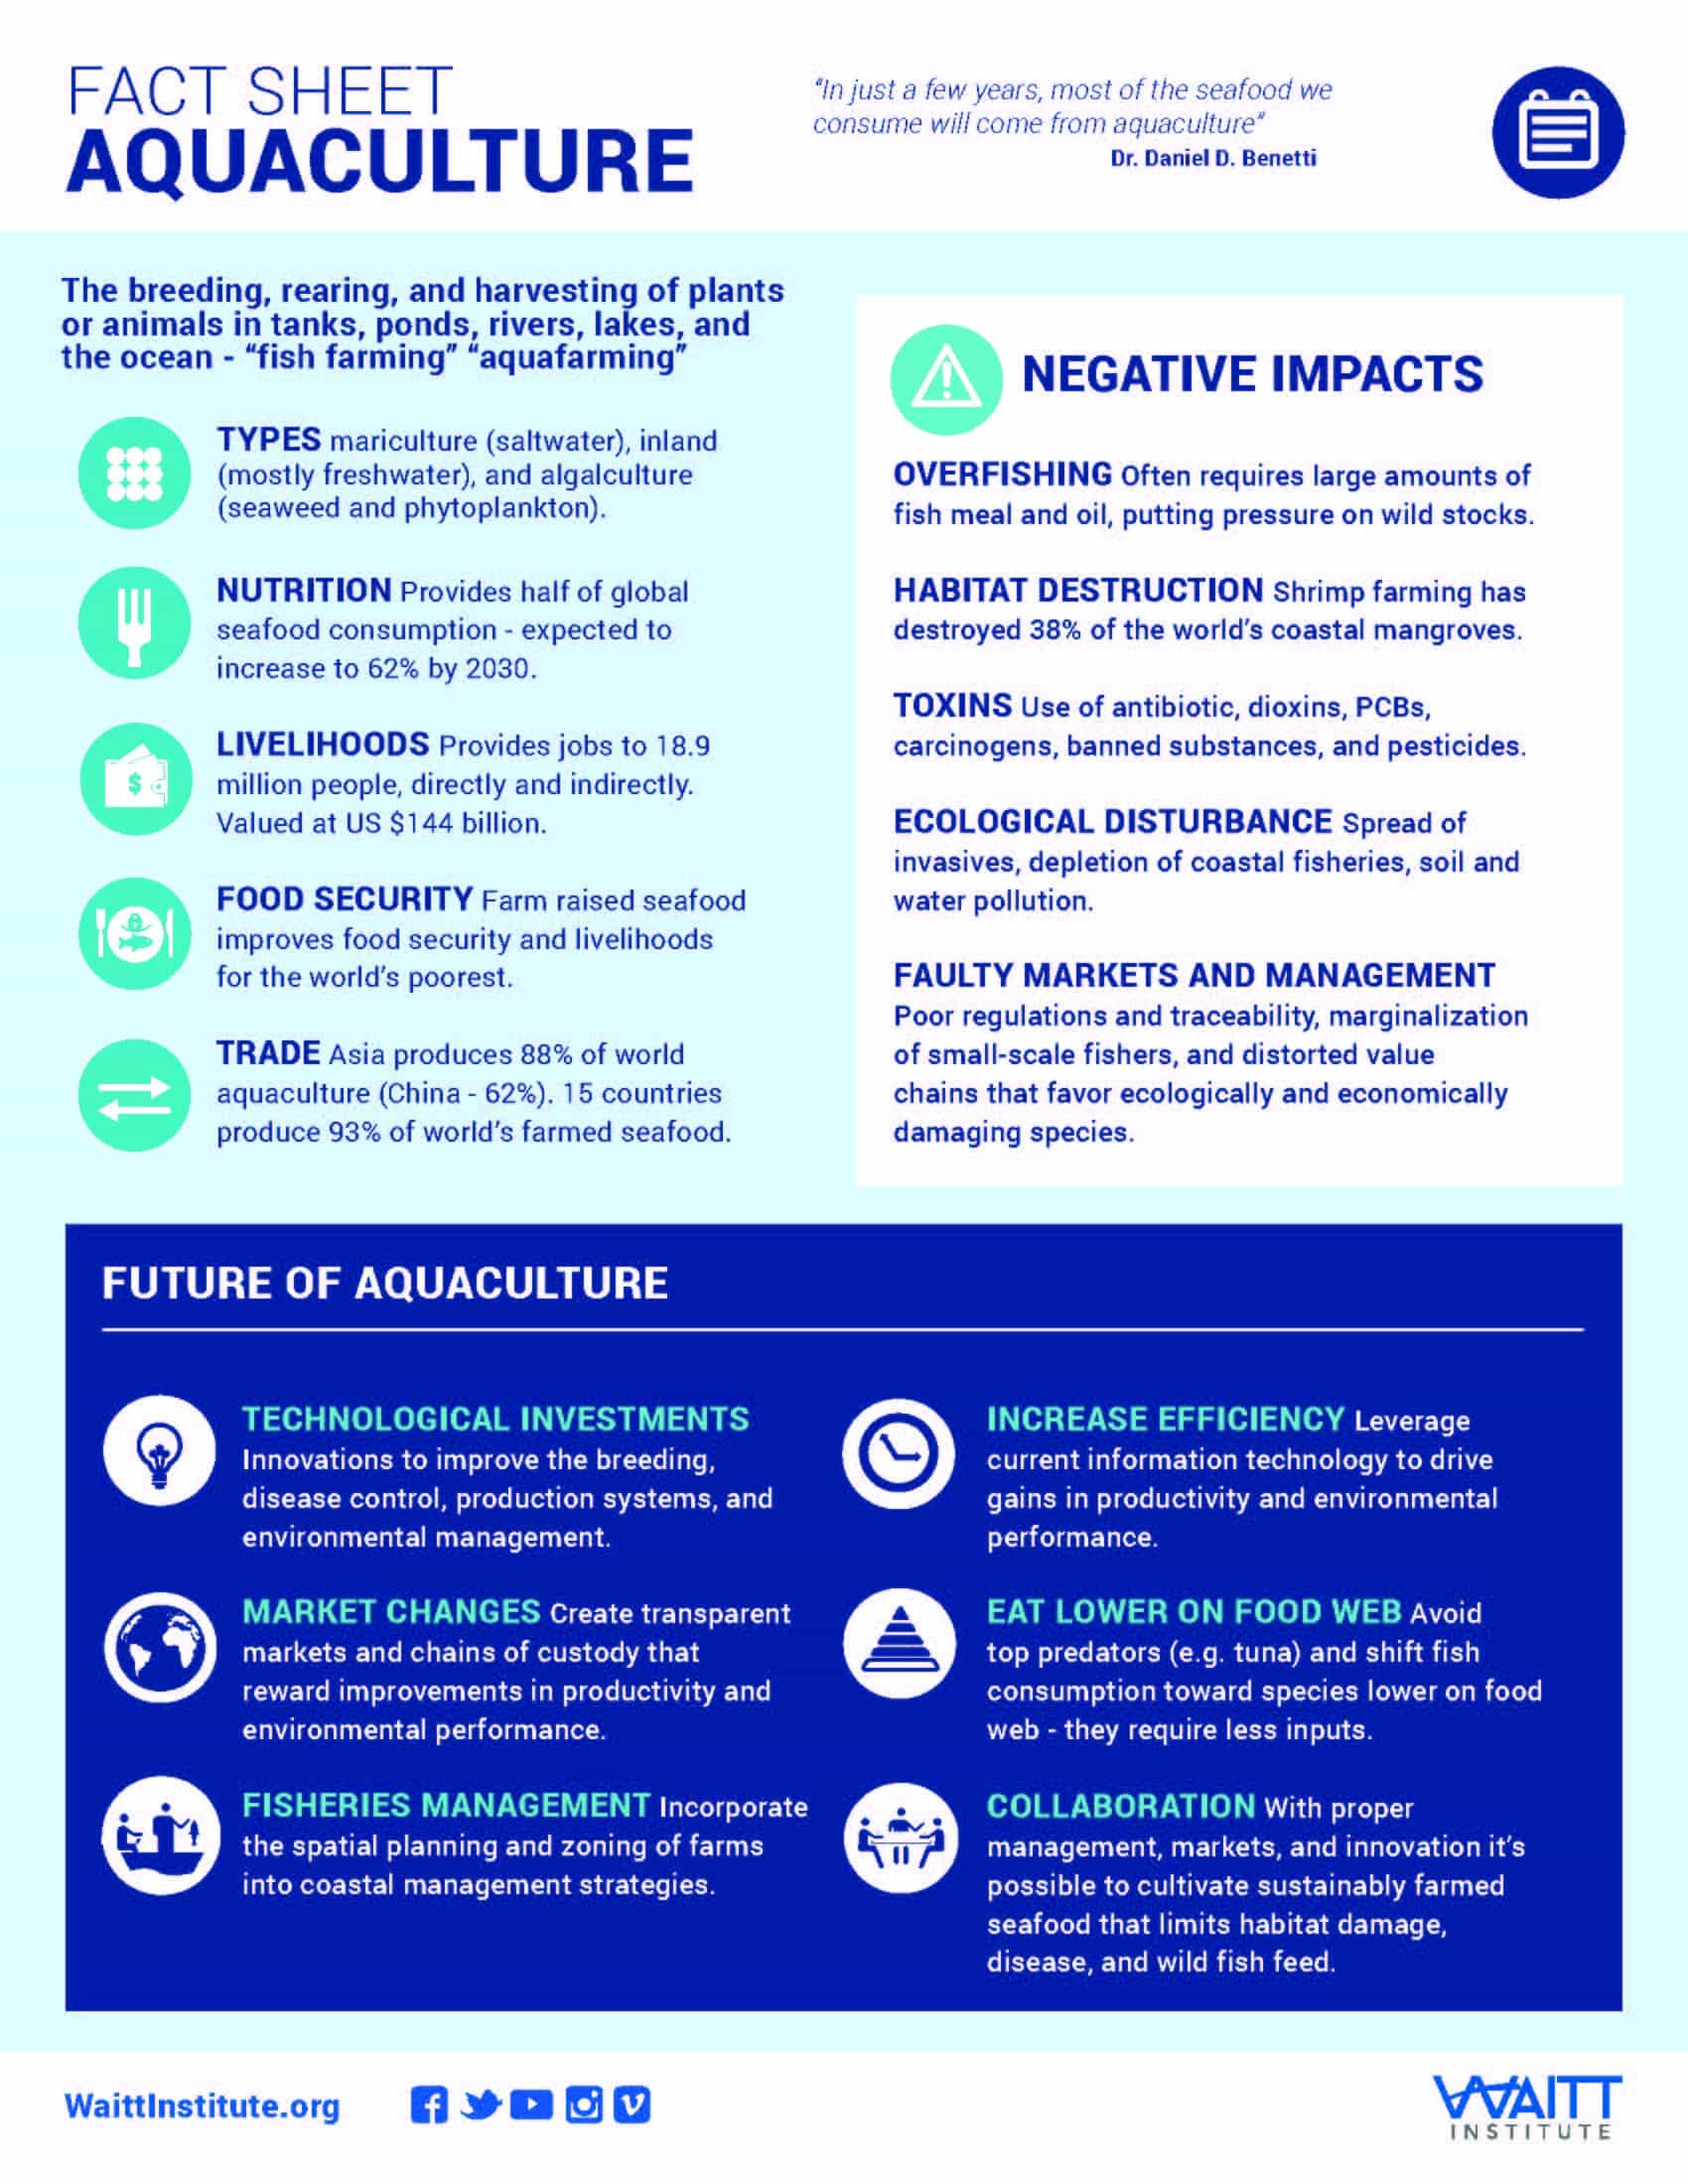 Aquaculture-Waitt-Institute-Fact-Sheet-5Dec2014_Page_1